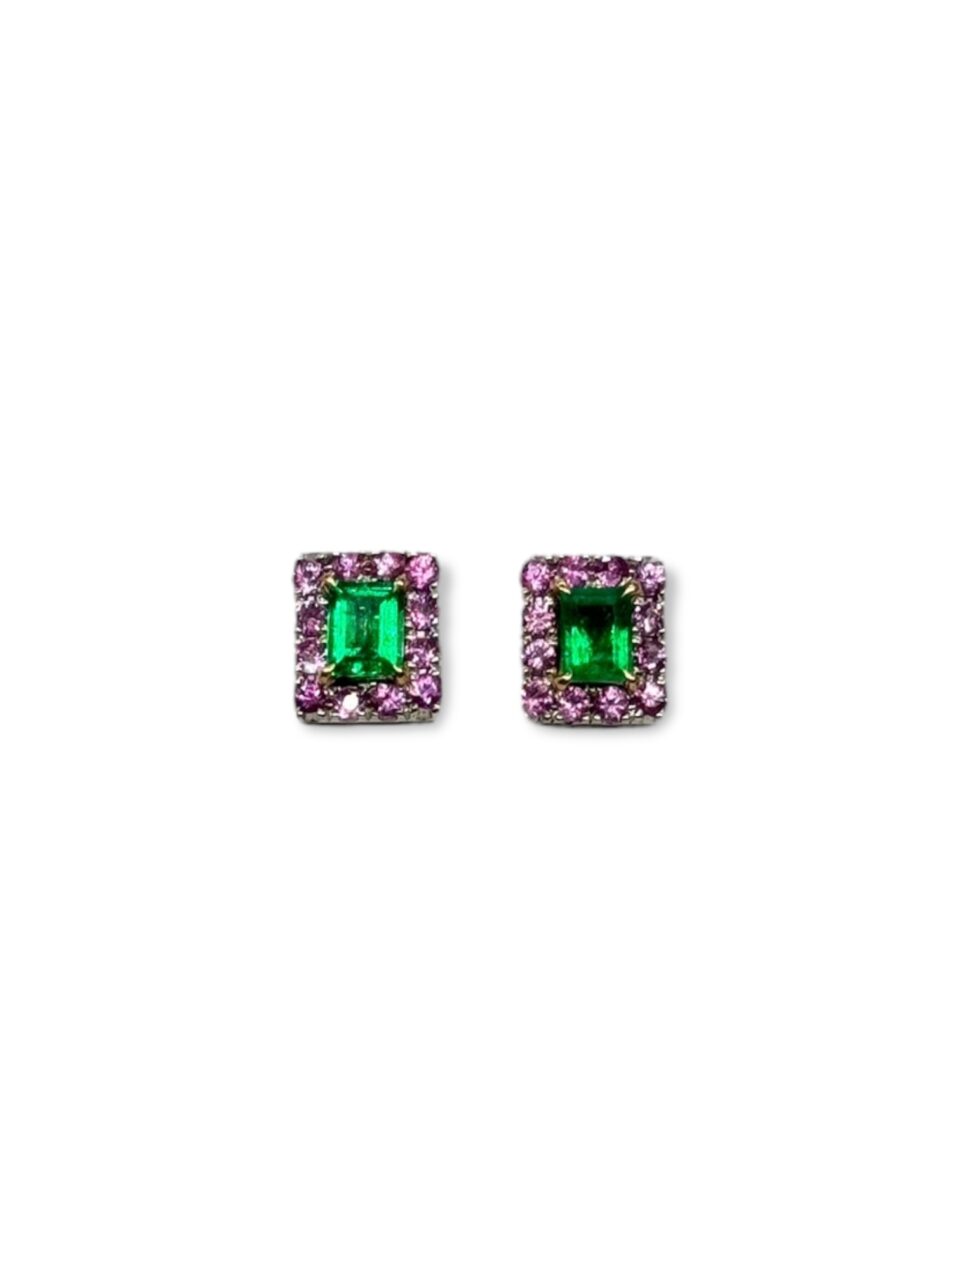 colombian emeralds, muzo emeralds, alpine green, george smith, emerald earrings, emerald studs